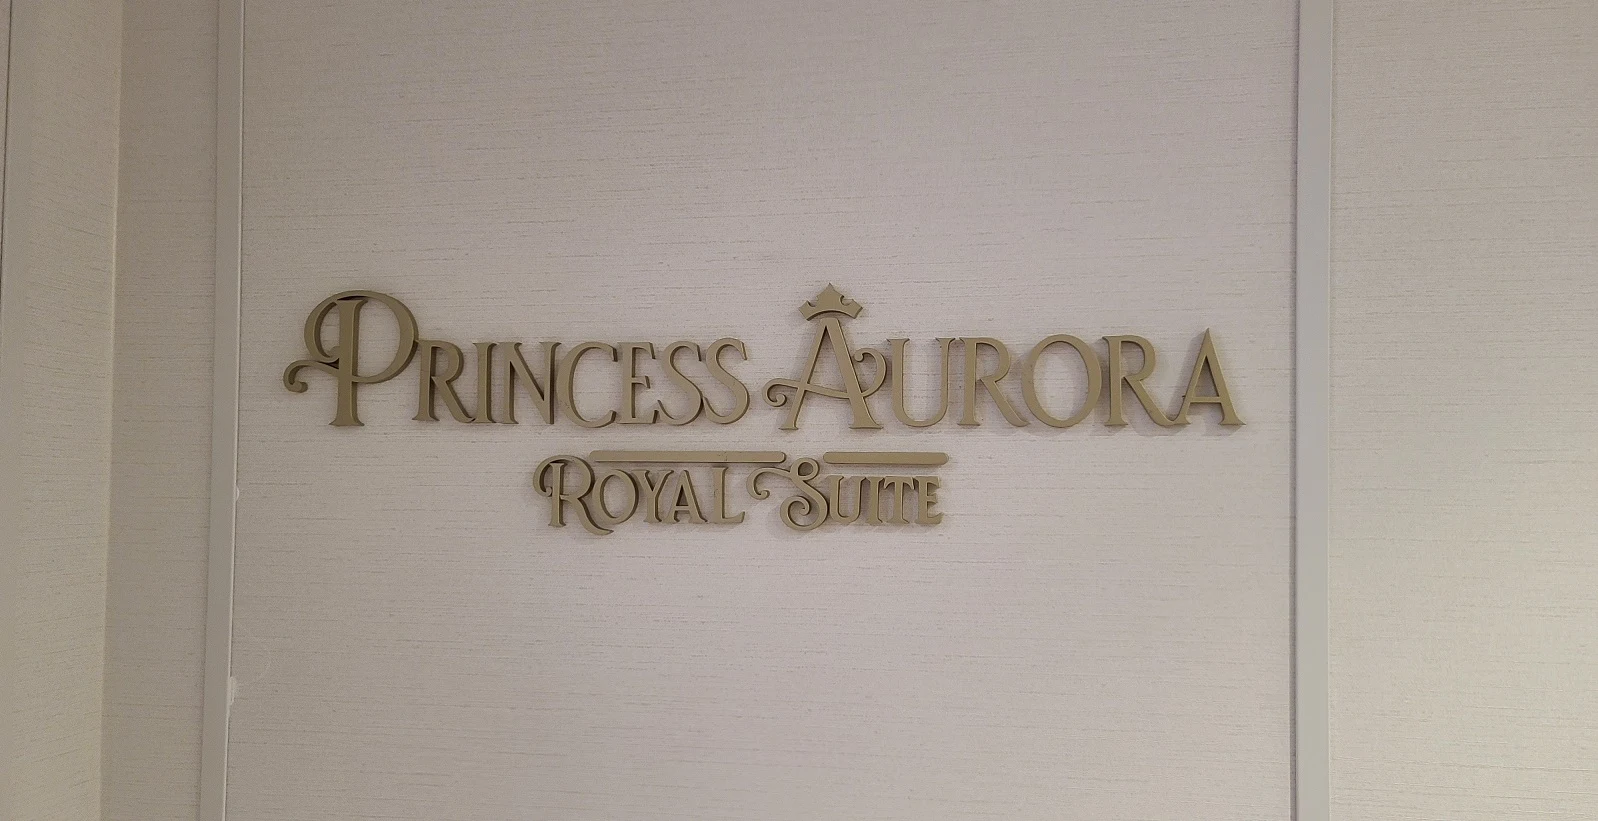 Disney Wish Princess Aurora Royal Suite Photo & Video Tour